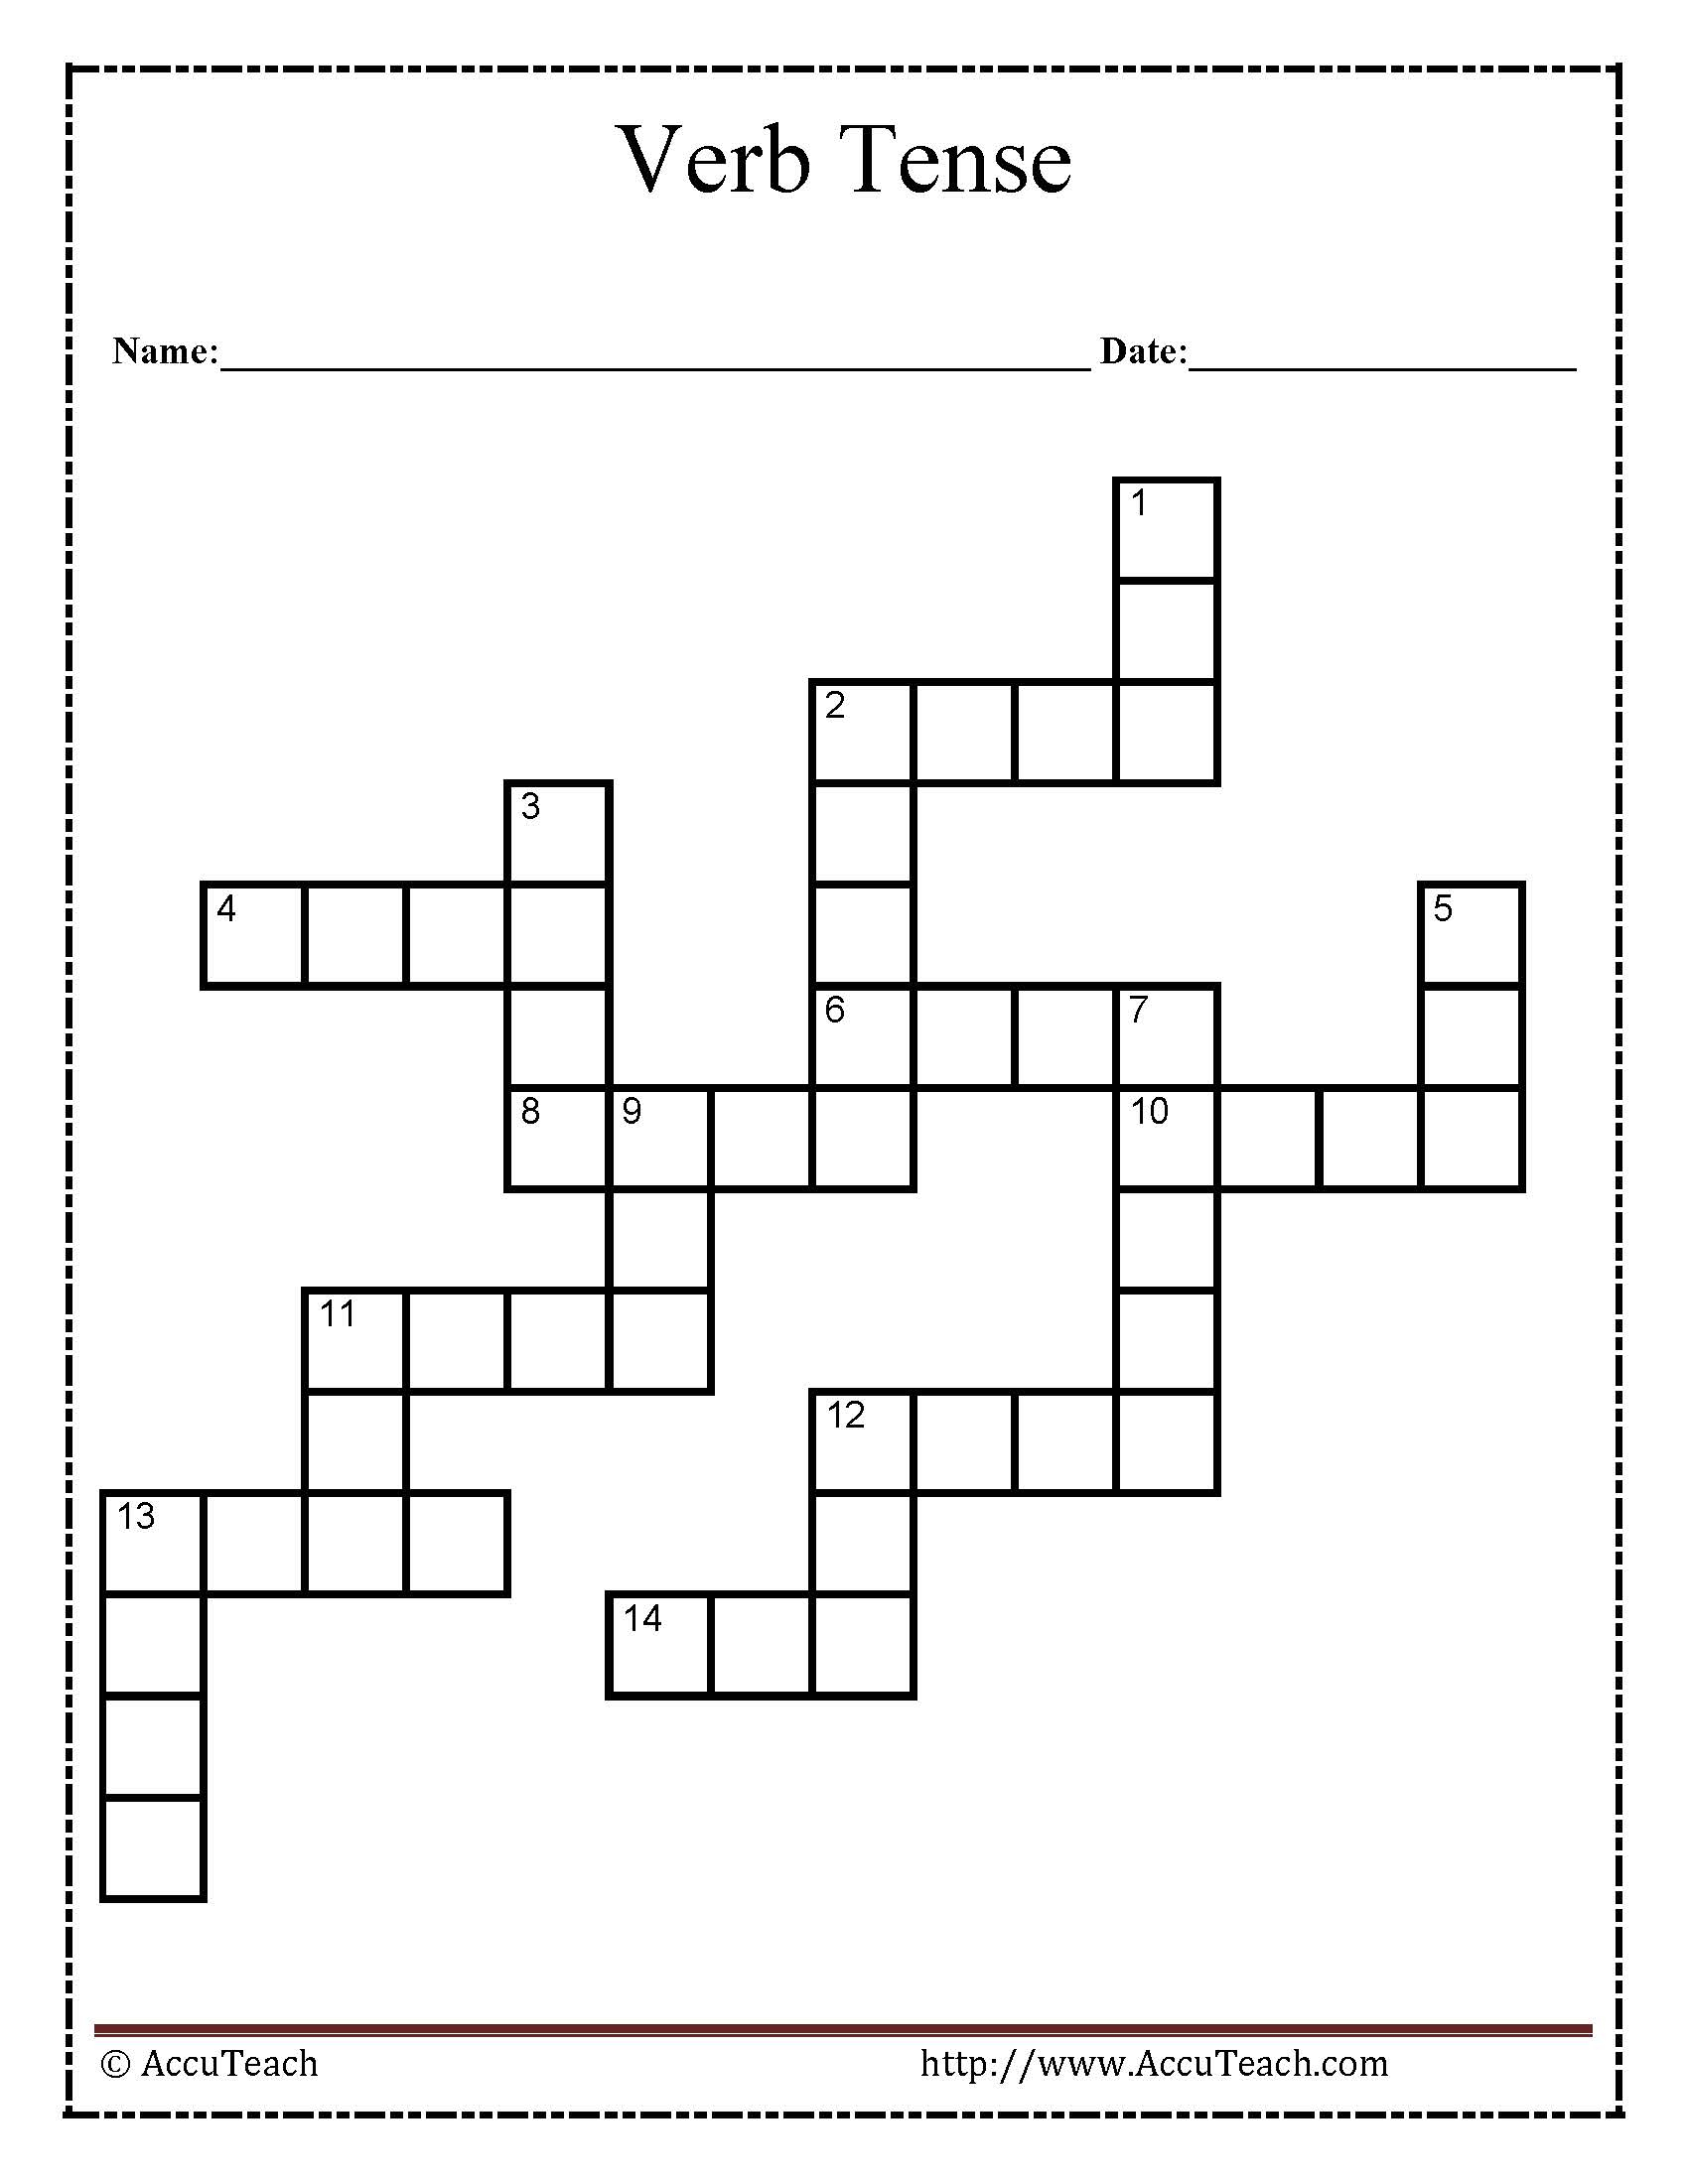 Verb Tense Crossword Puzzle Worksheet - Printable Crossword Puzzle For Grade 5